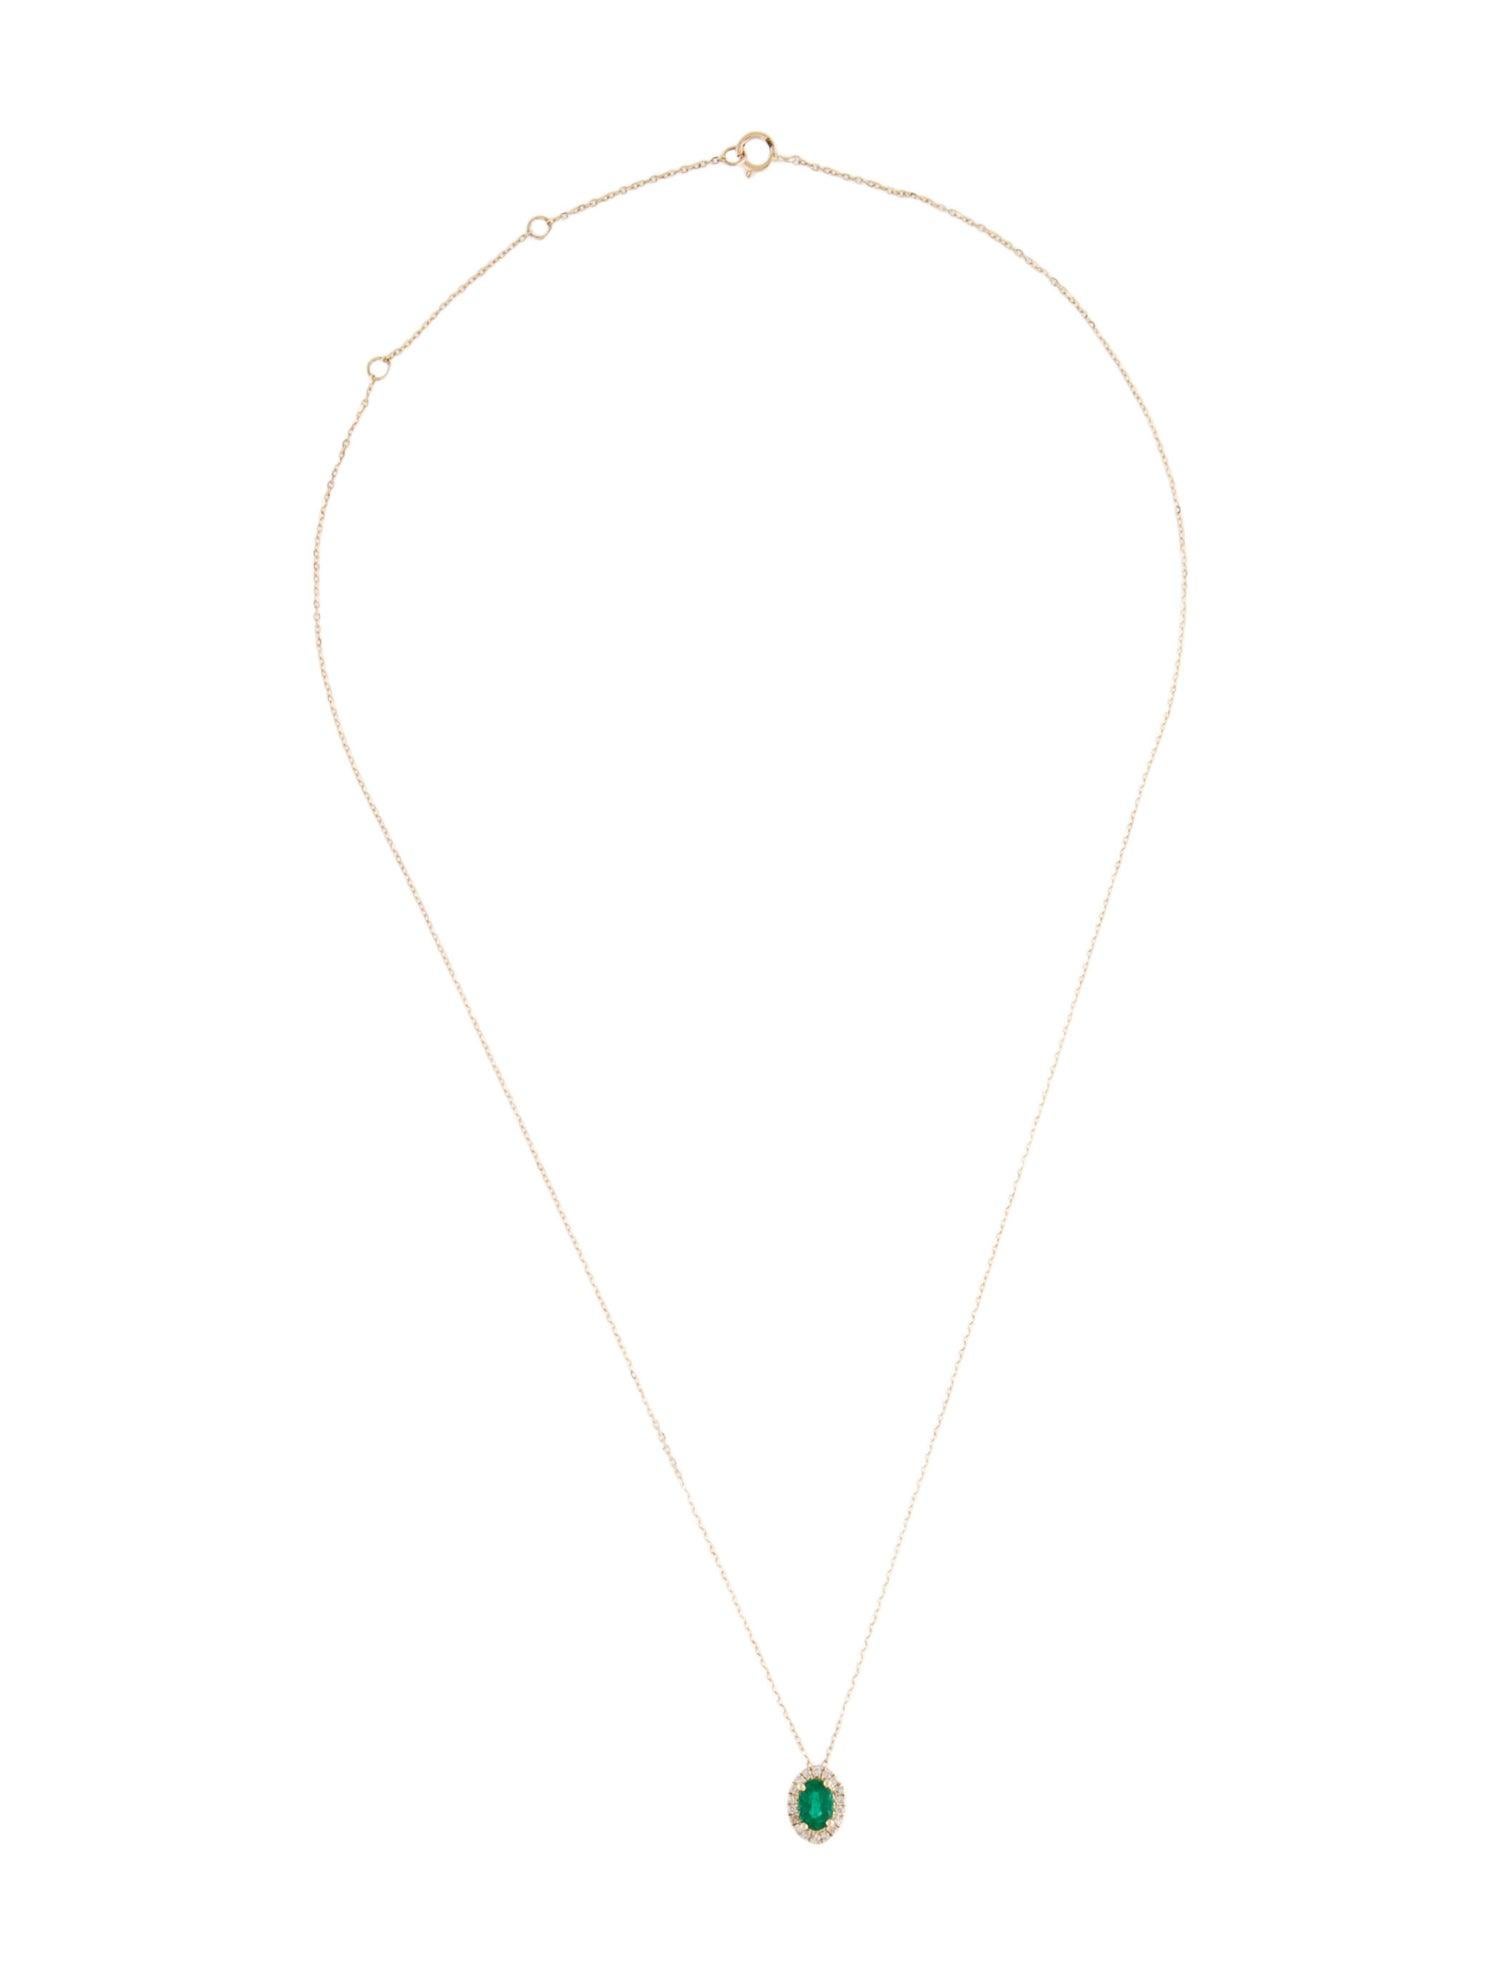 Brilliant Cut 14K Emerald & Diamond Pendant Necklace - Elegant Gemstone Statement Piece